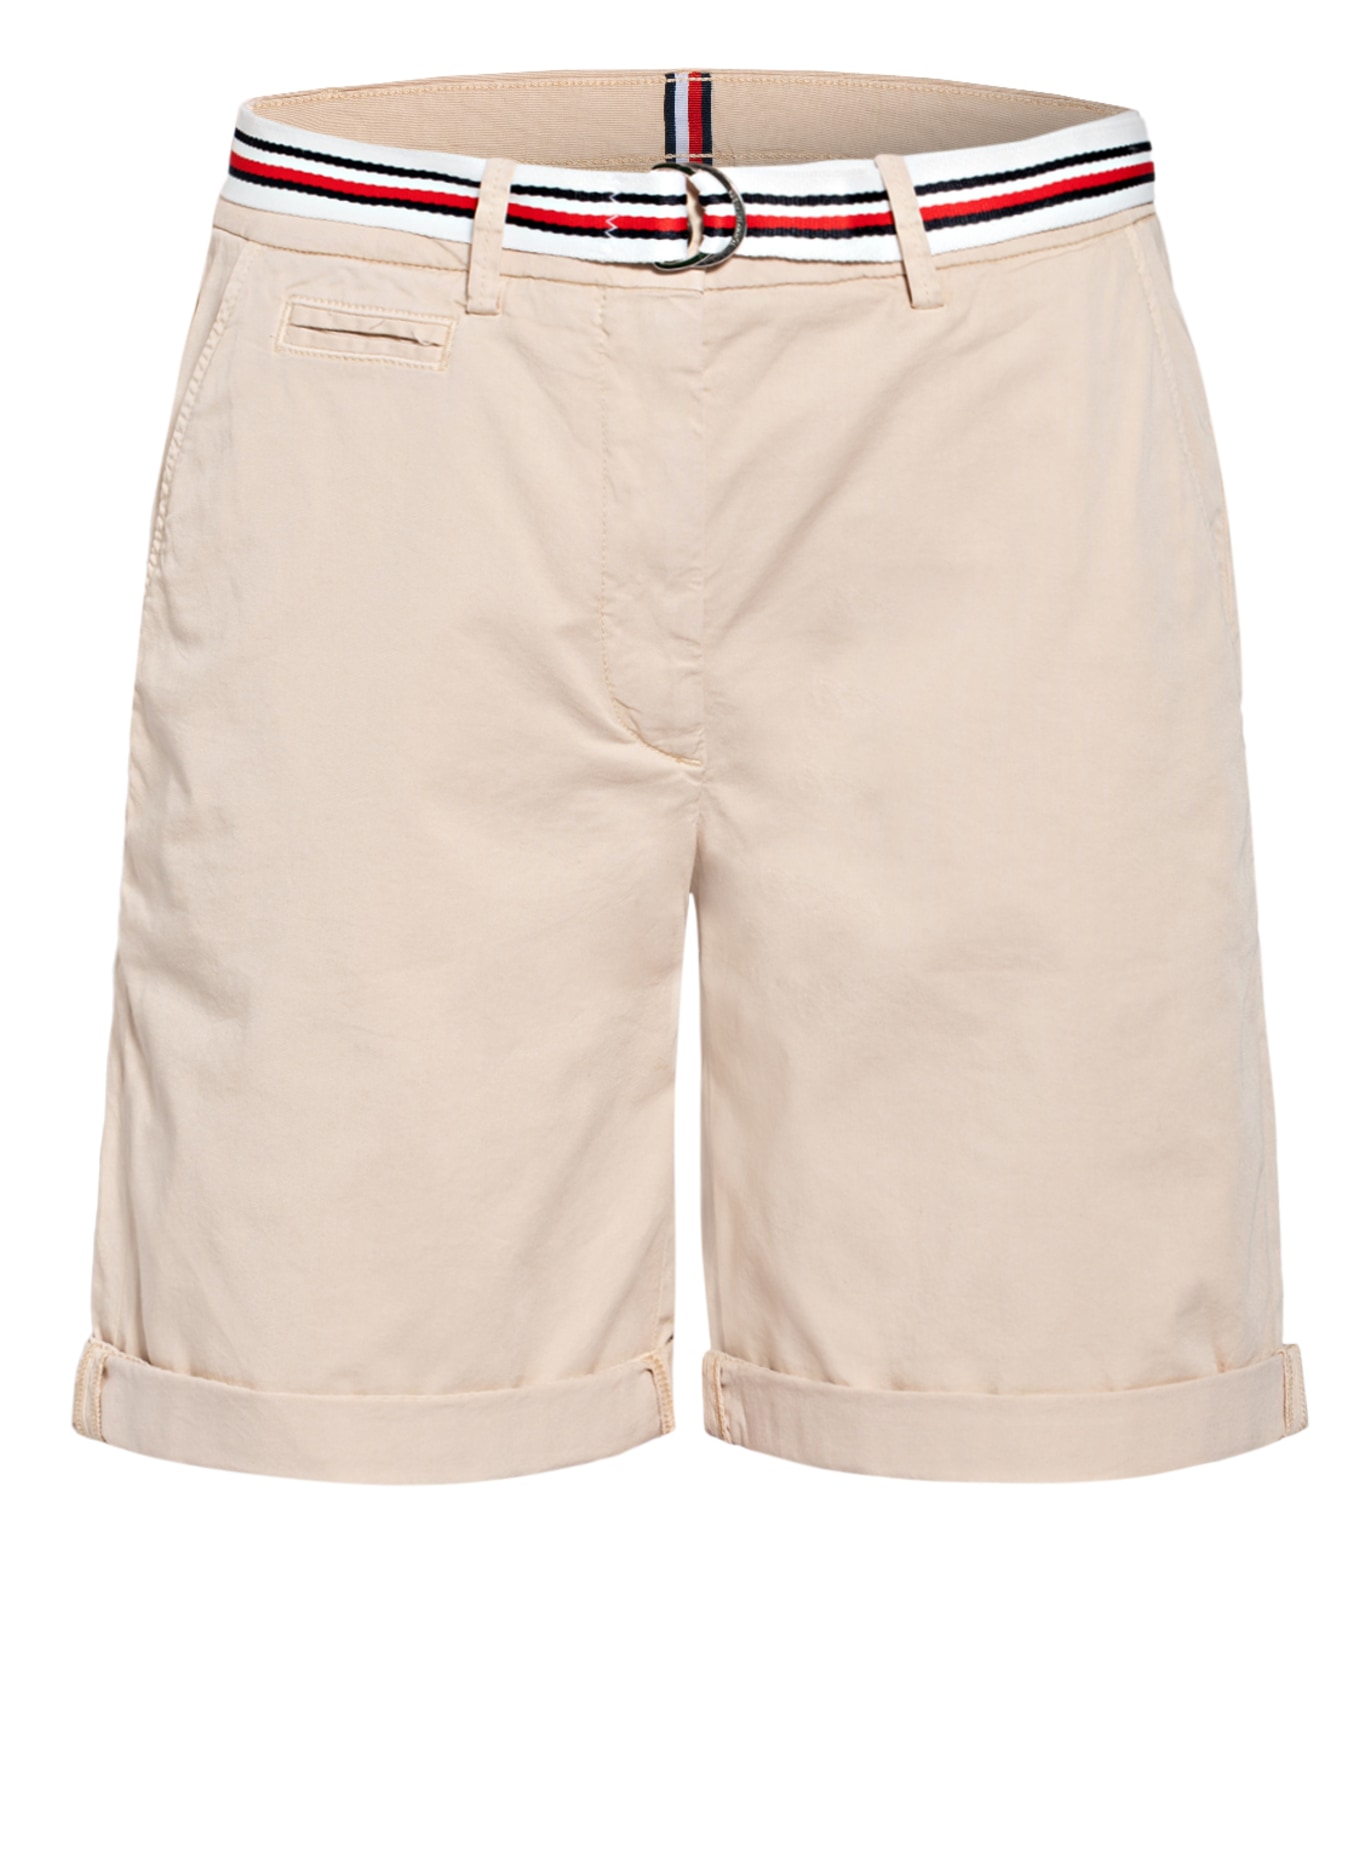 TOMMY HILFIGER Shorts, Farbe: CAMEL (Bild 1)